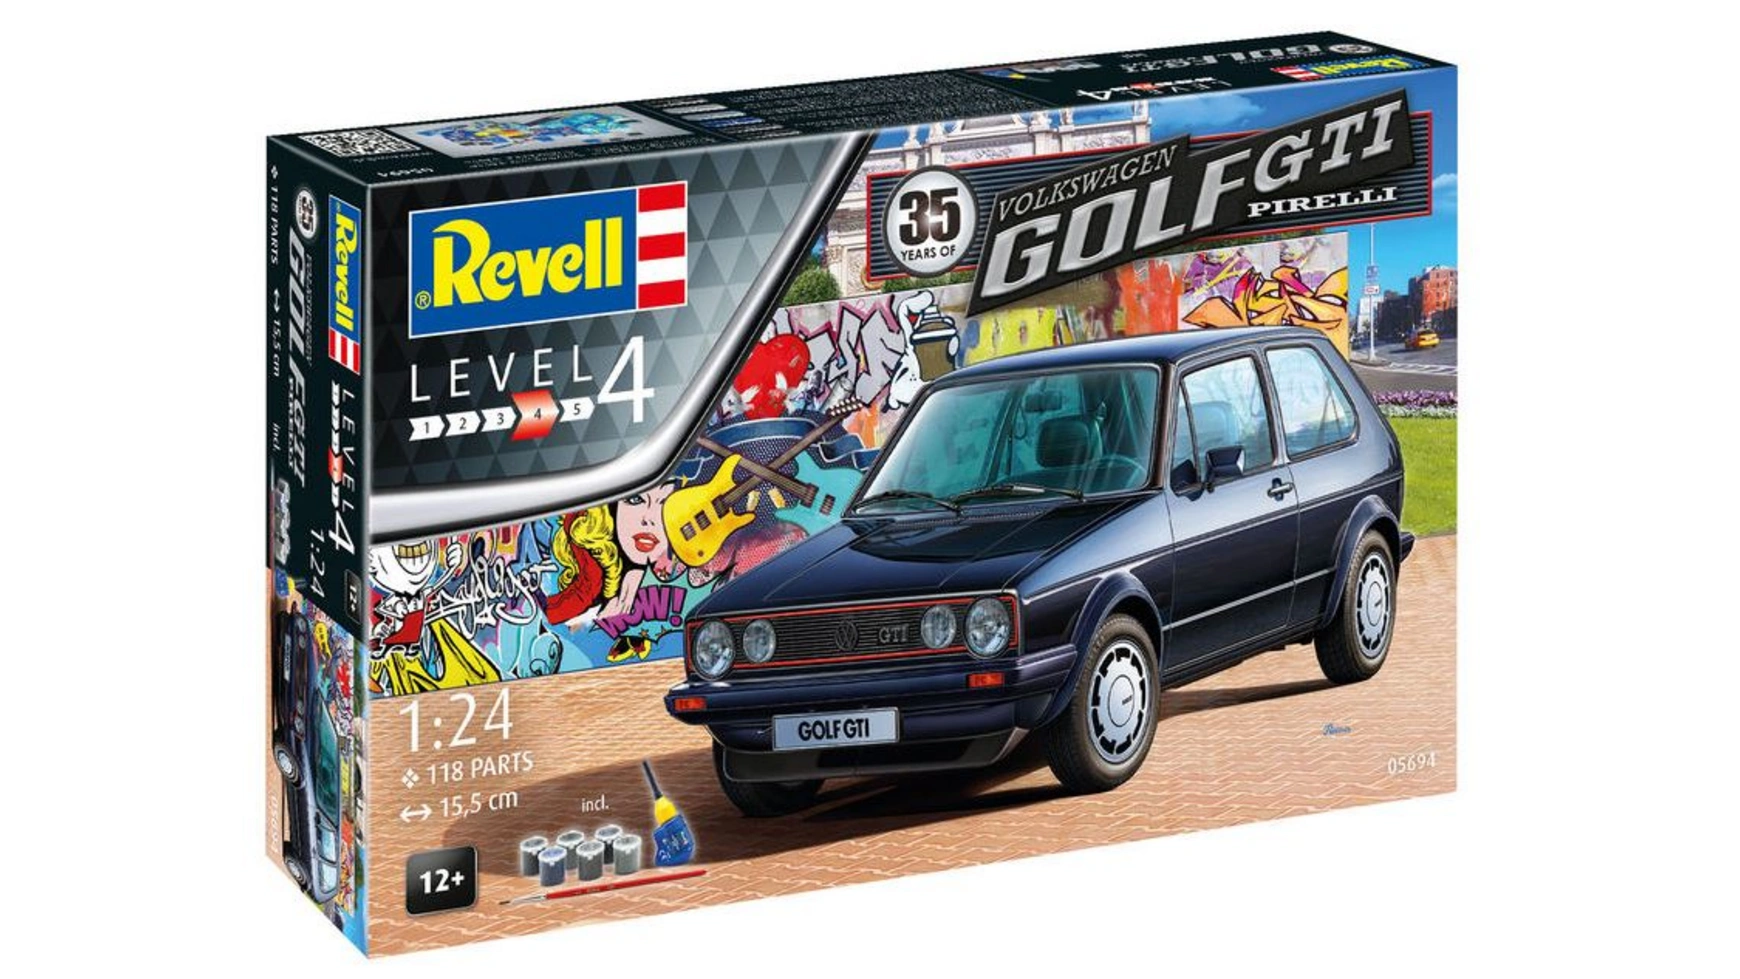 Revell Подарочный набор Volkswagen Golf GTI Pirelli на 35 лет